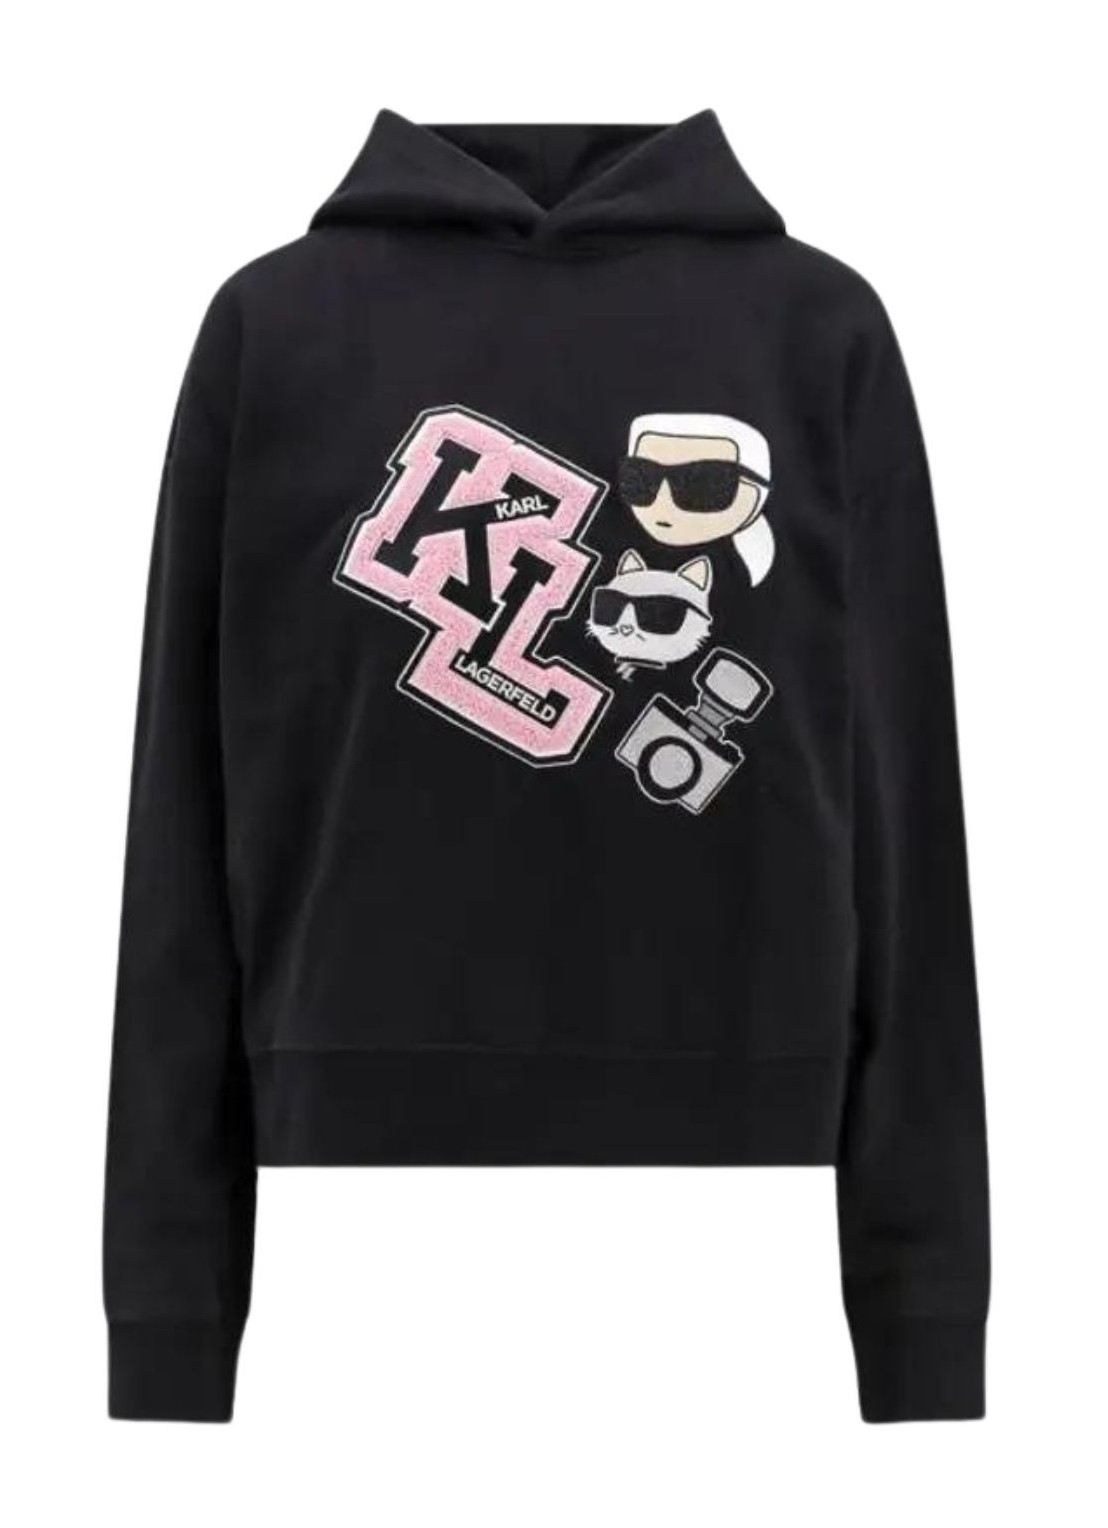 Sudadera karl lagerfeld sweater woman ikonik varsity hoodie 240w1813 999 talla negro
 